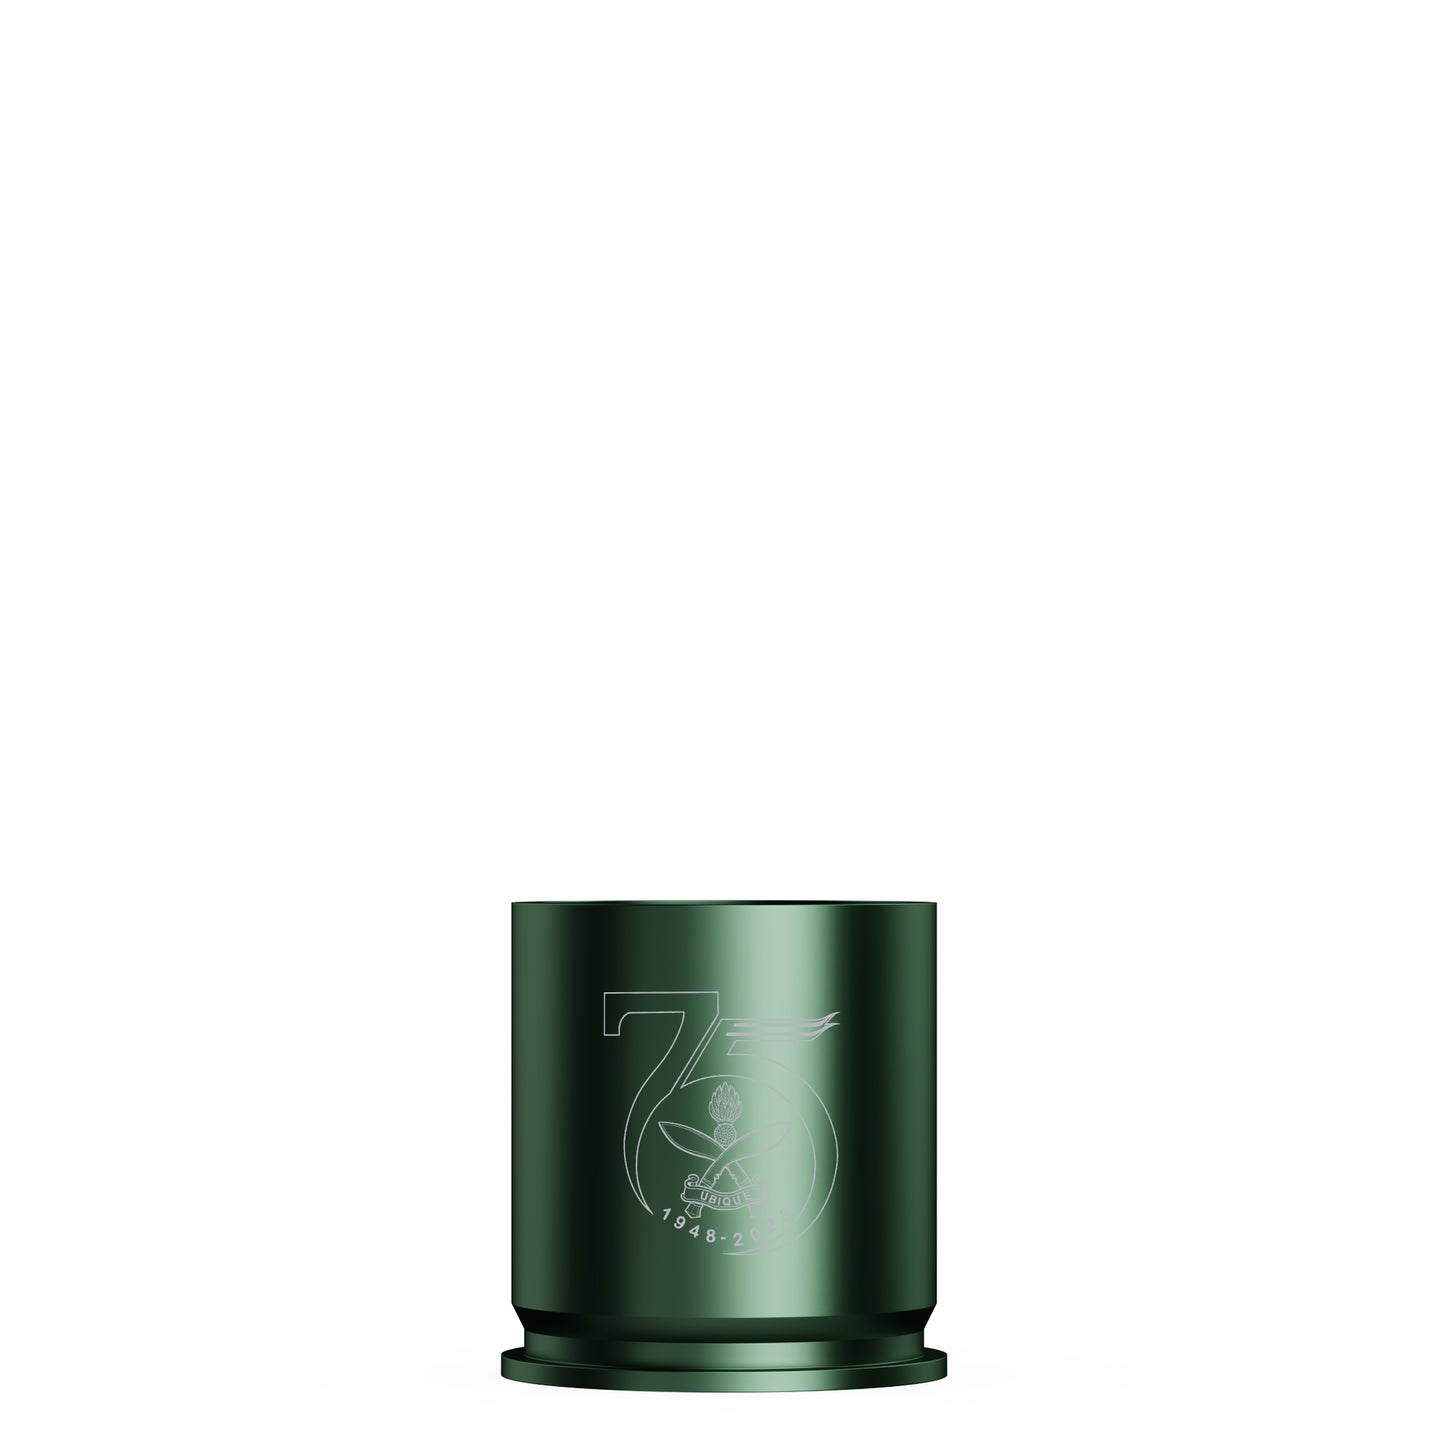 Gurkha 40mm grenade case replica shot glass green